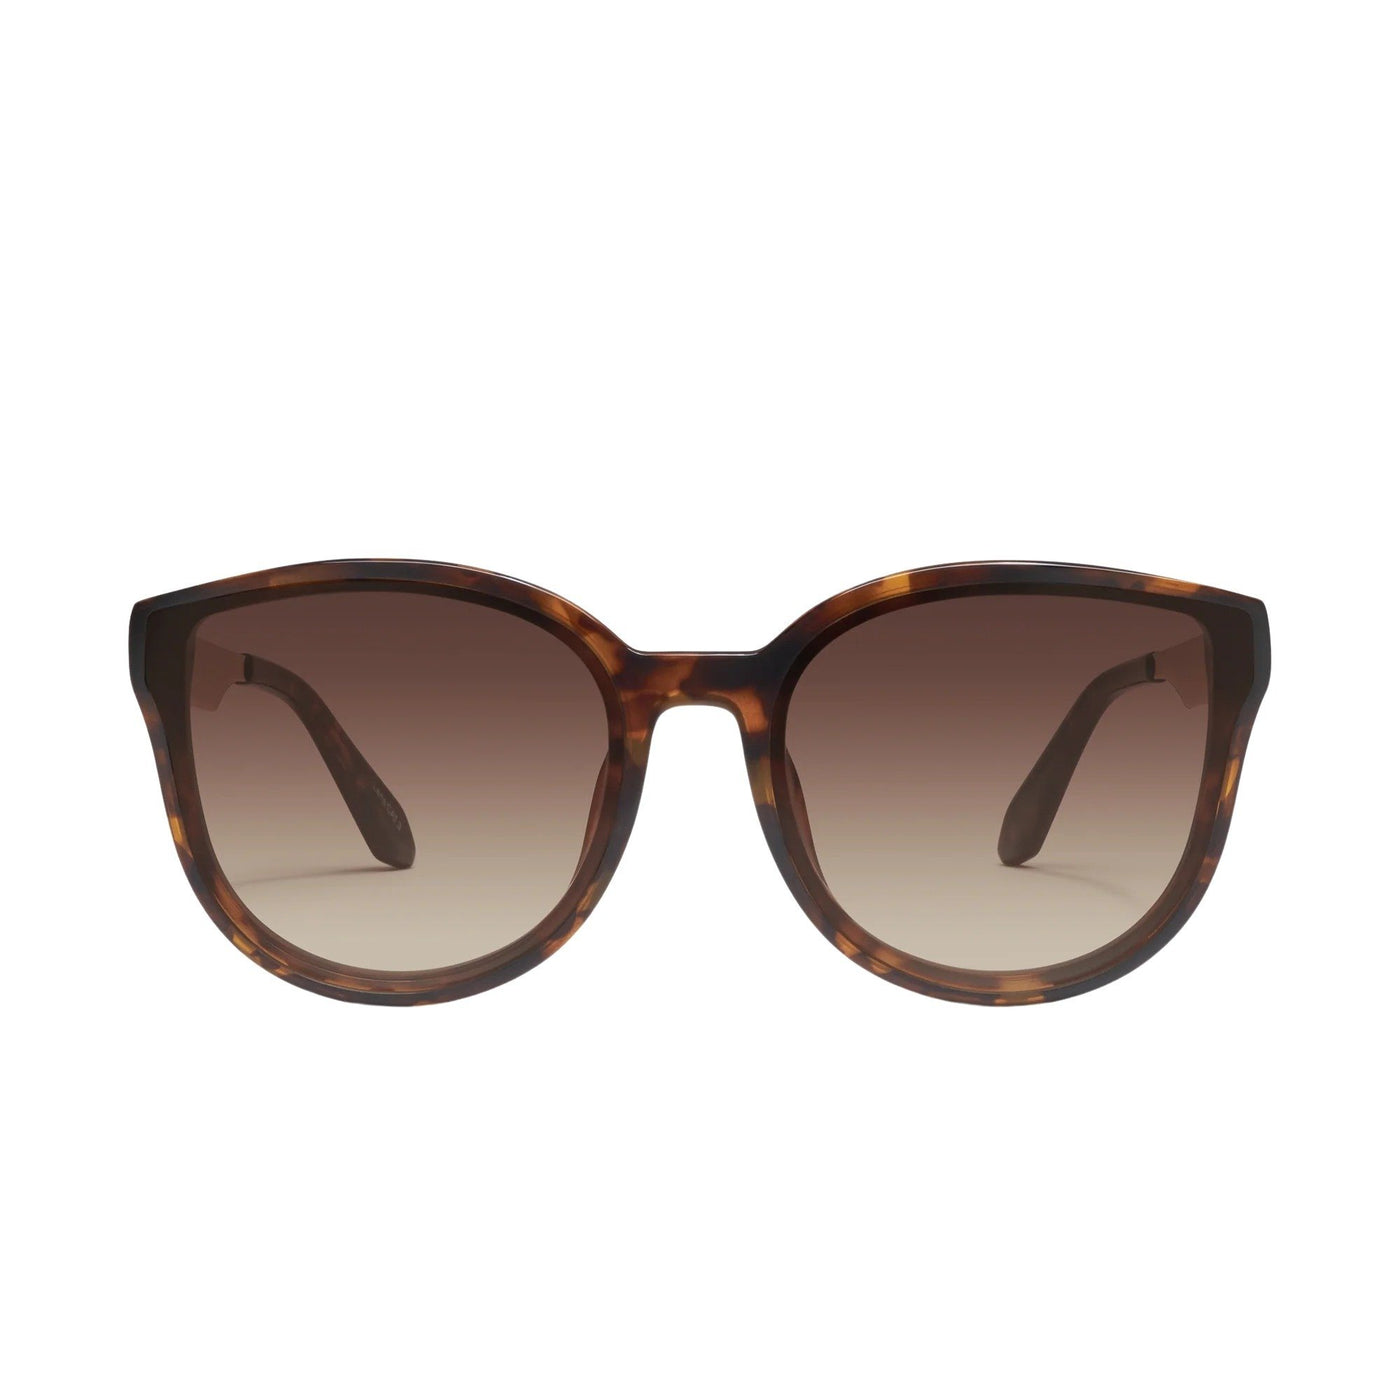 Quay Women's Date Night Oversized Round Sunglasses (Neutral Tortoise Frame/Brown Lens) - front